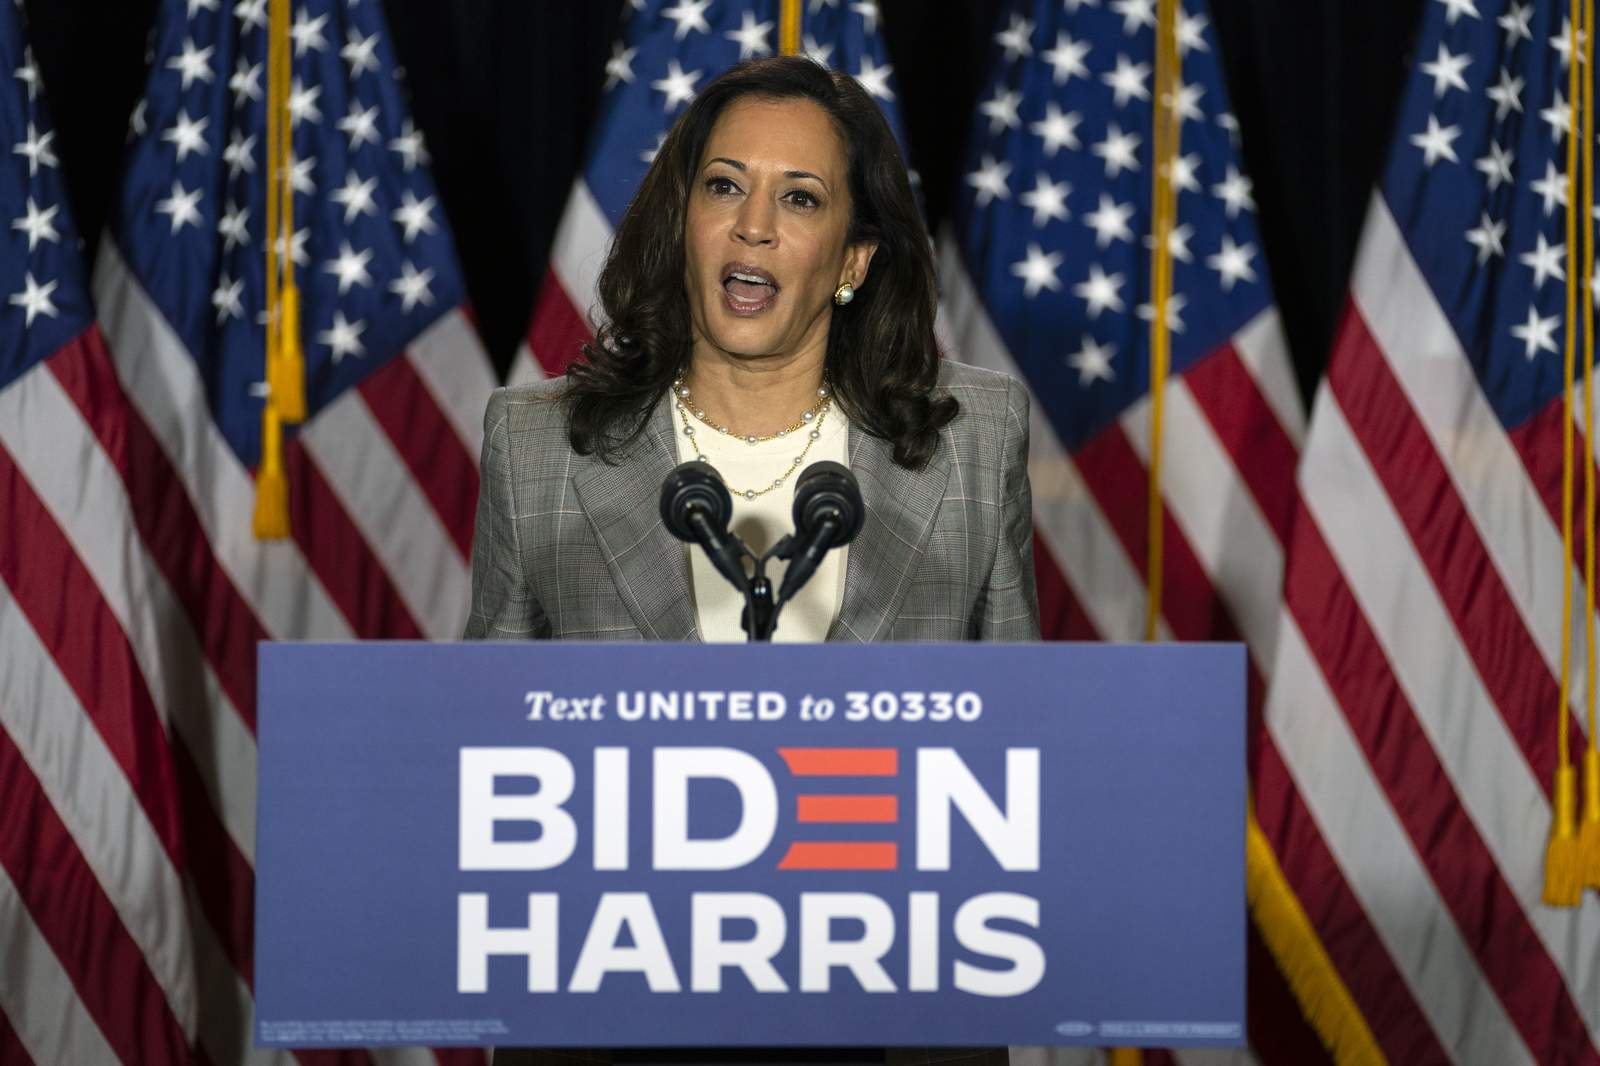 Flashpoint 8/16/20: Kamala Harris picked as Joe Bidens running mate ahead of Democratic National Convention